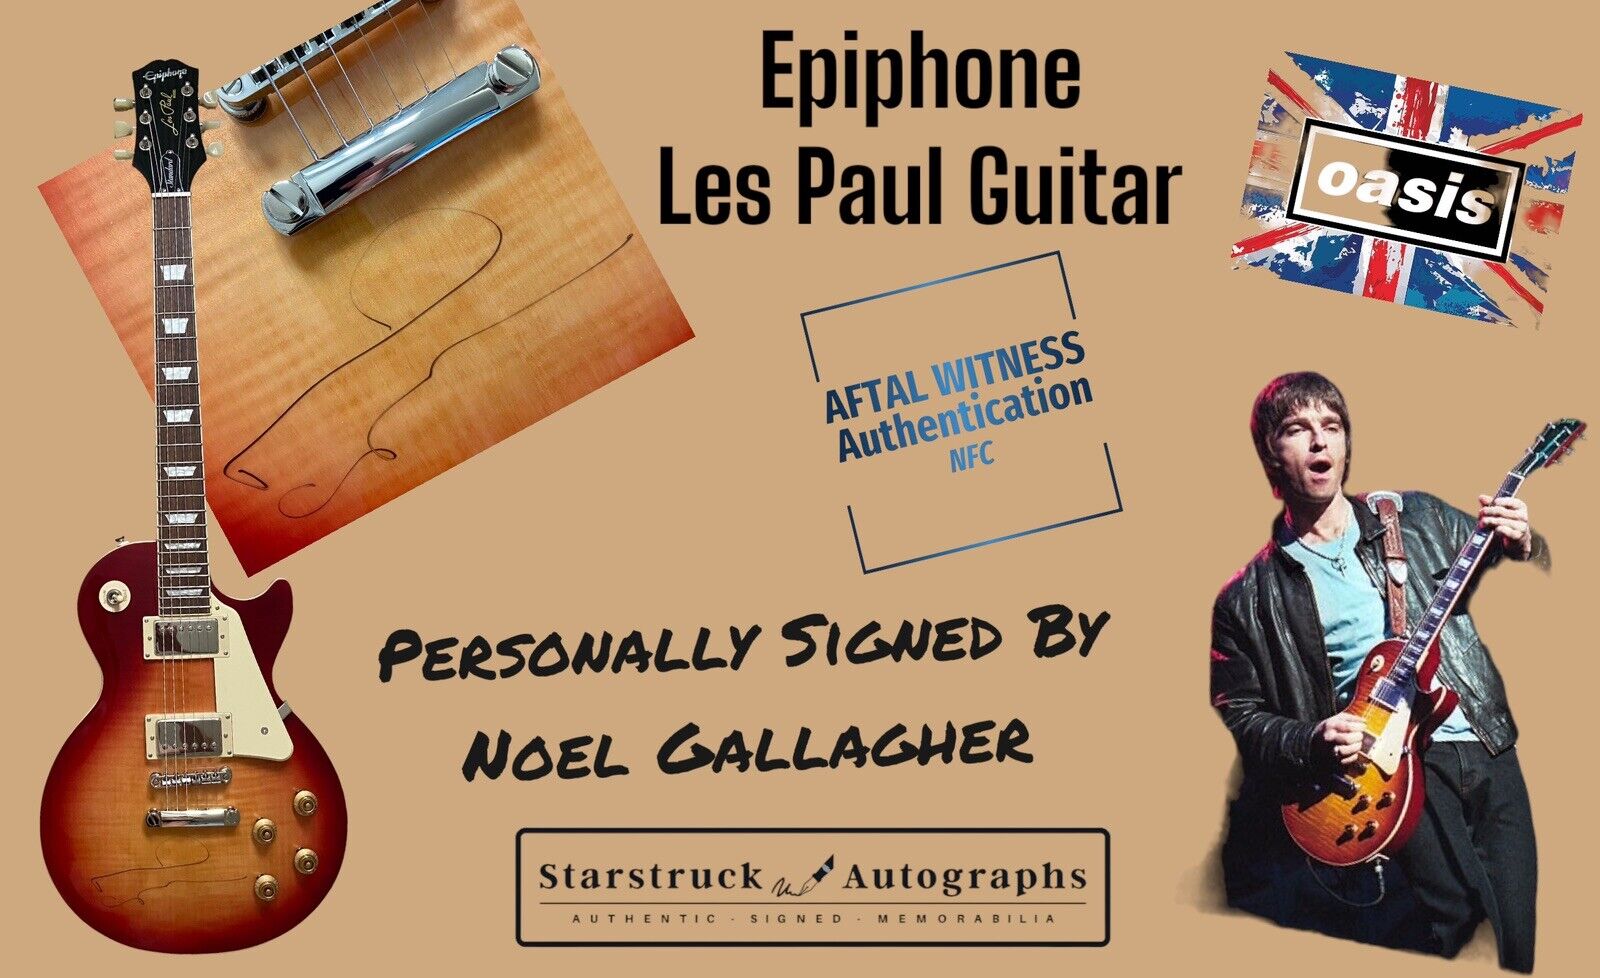 Noel Gallagher Signed EPIPHONE LES PAUL Guitar - Oasis - AFTAL Witnessed NFC